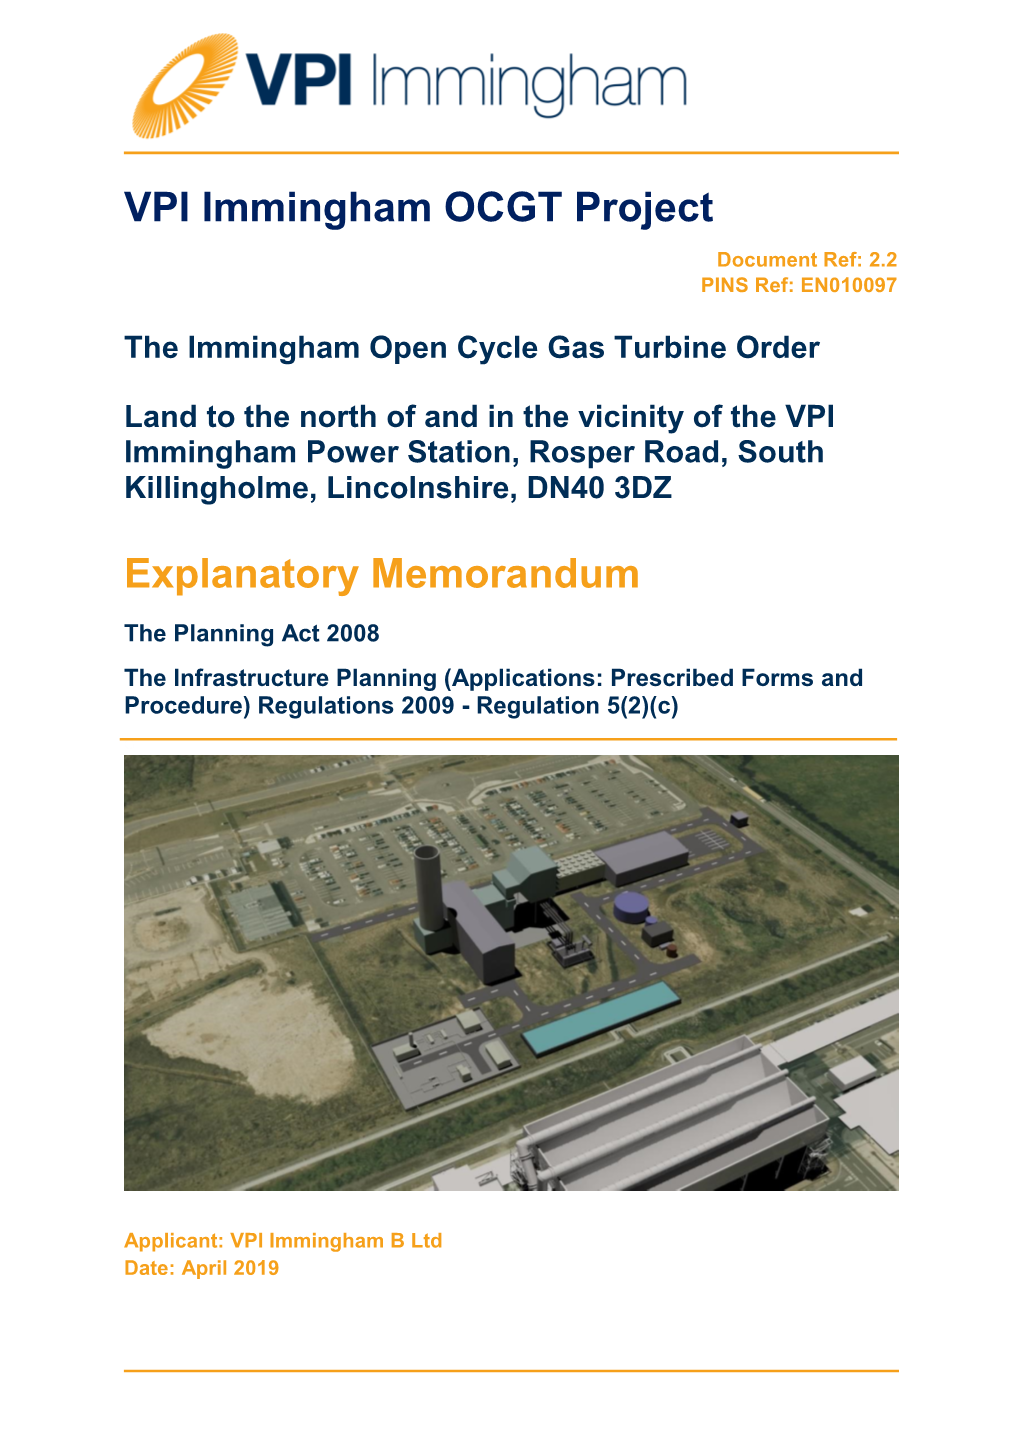 VPI Immingham OCGT Project Explanatory Memorandum